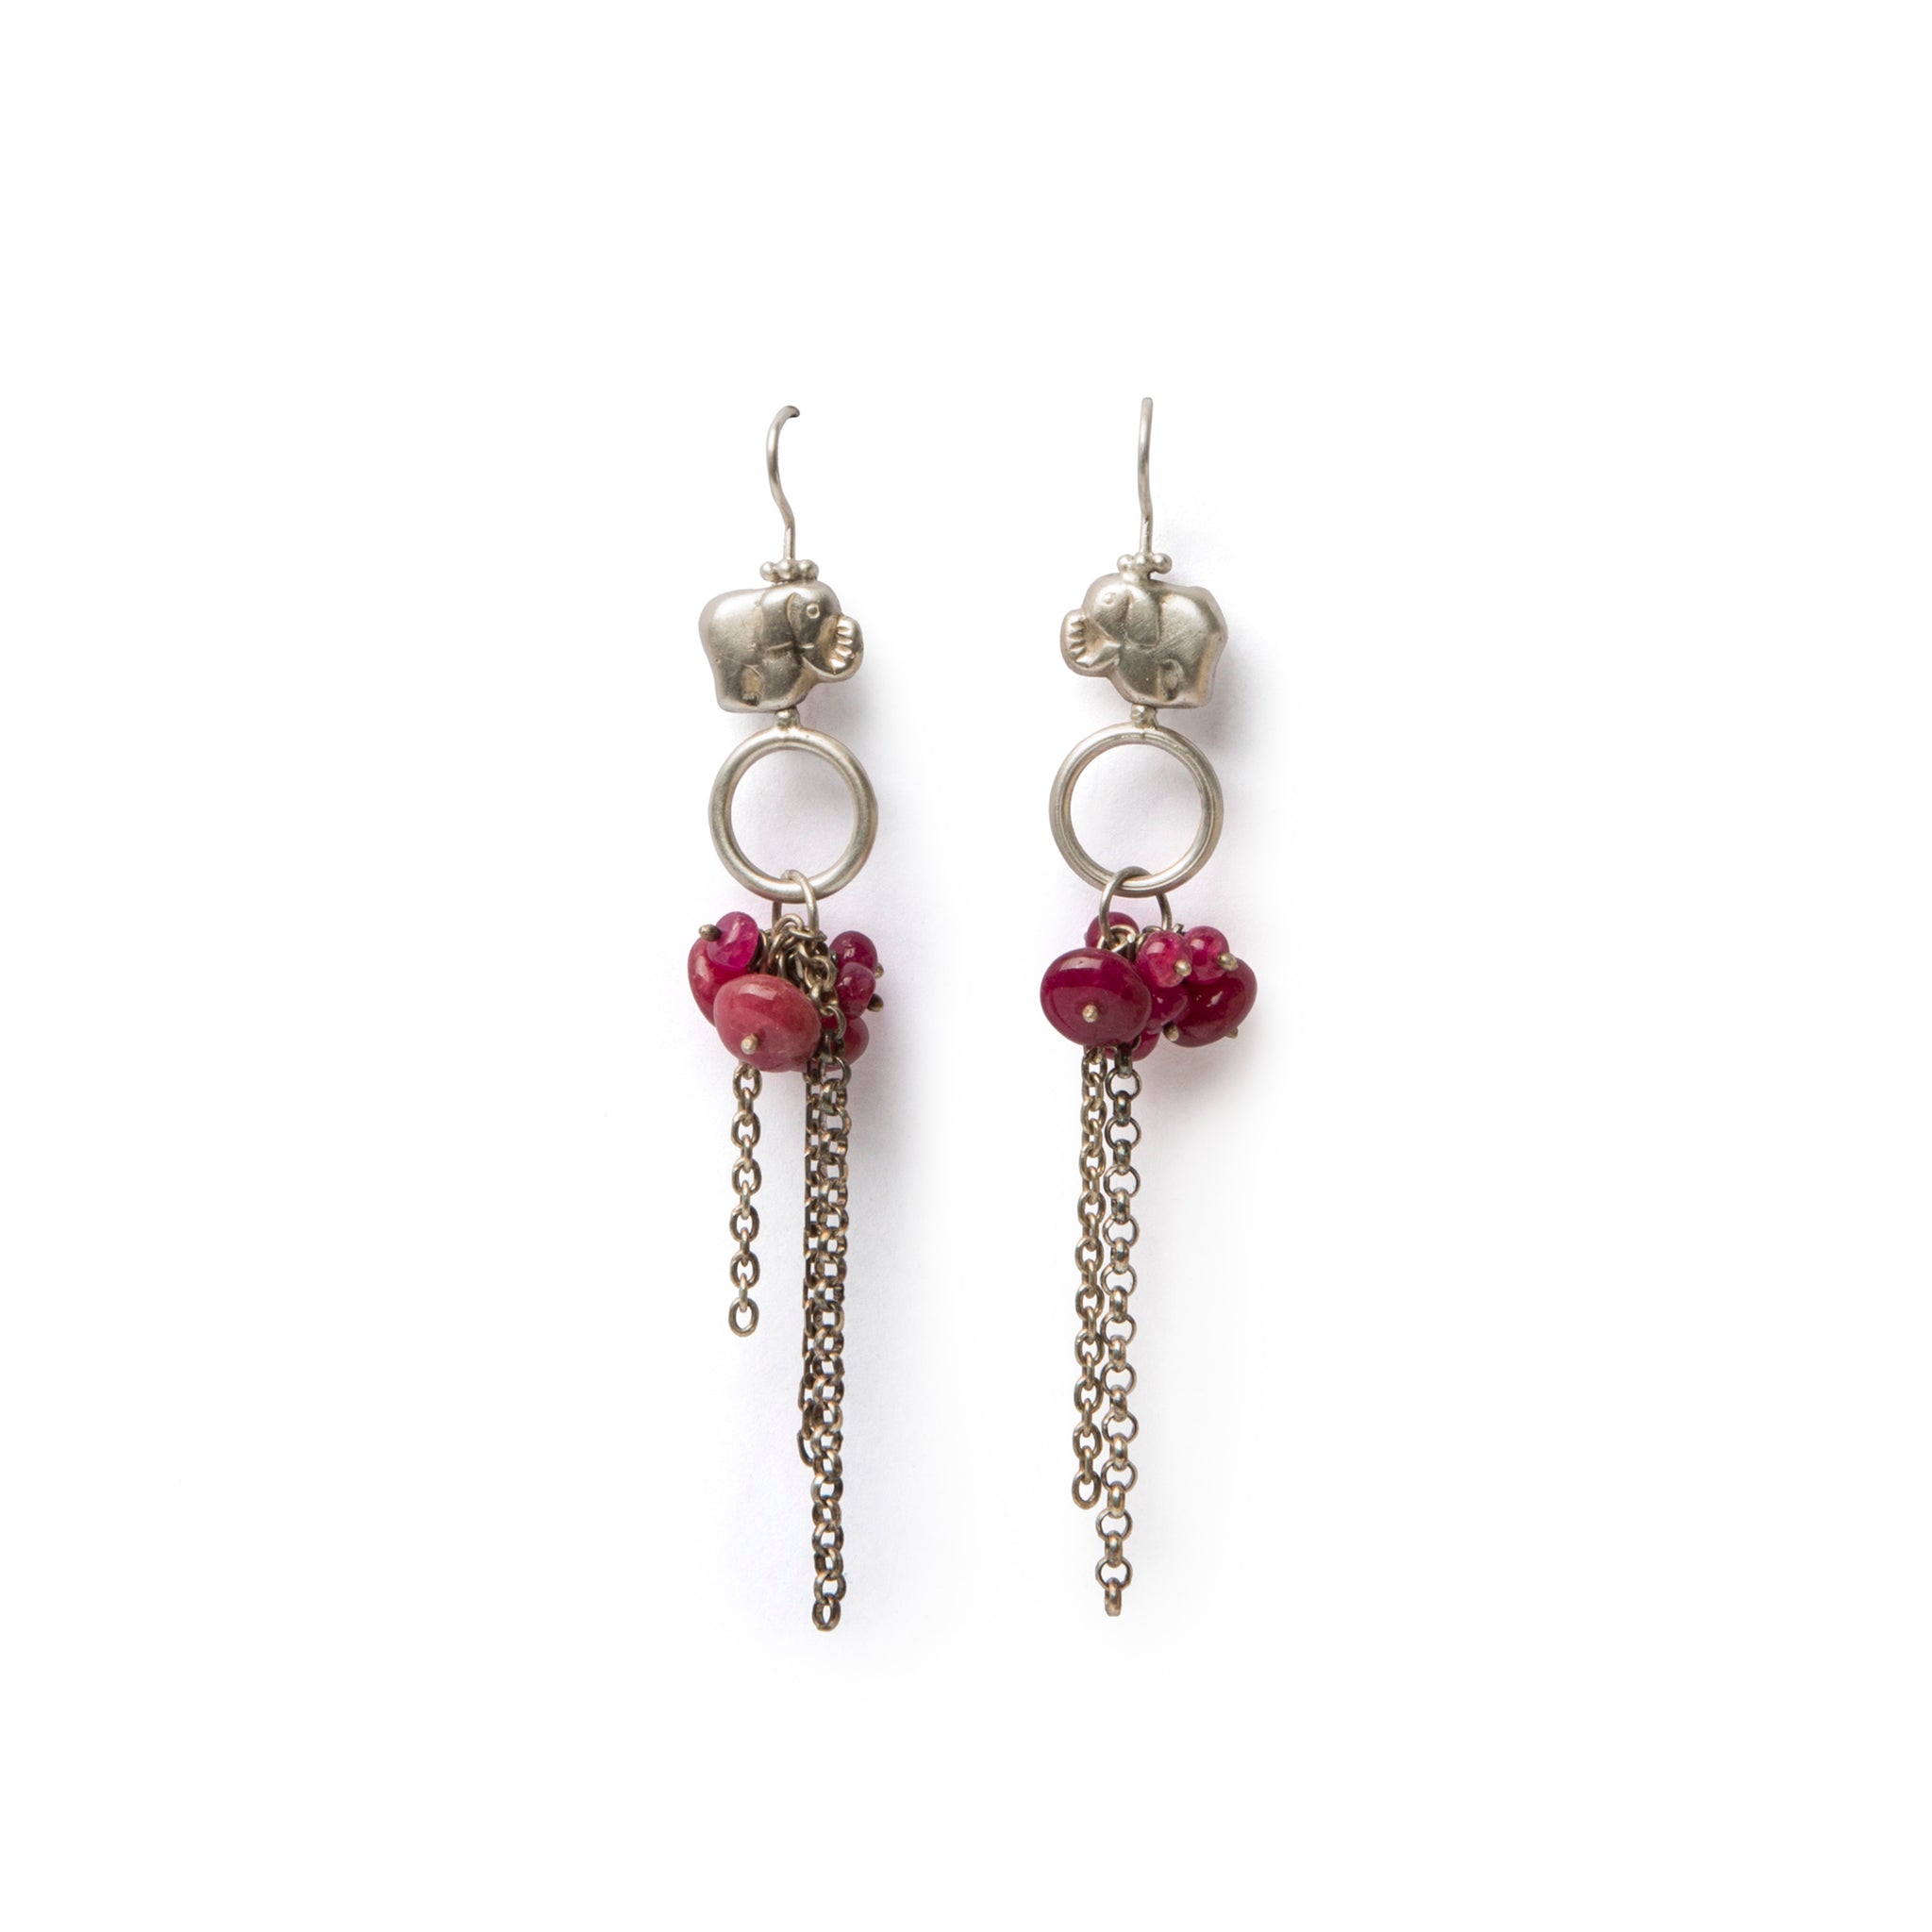 Elephant earrings with ruby beads